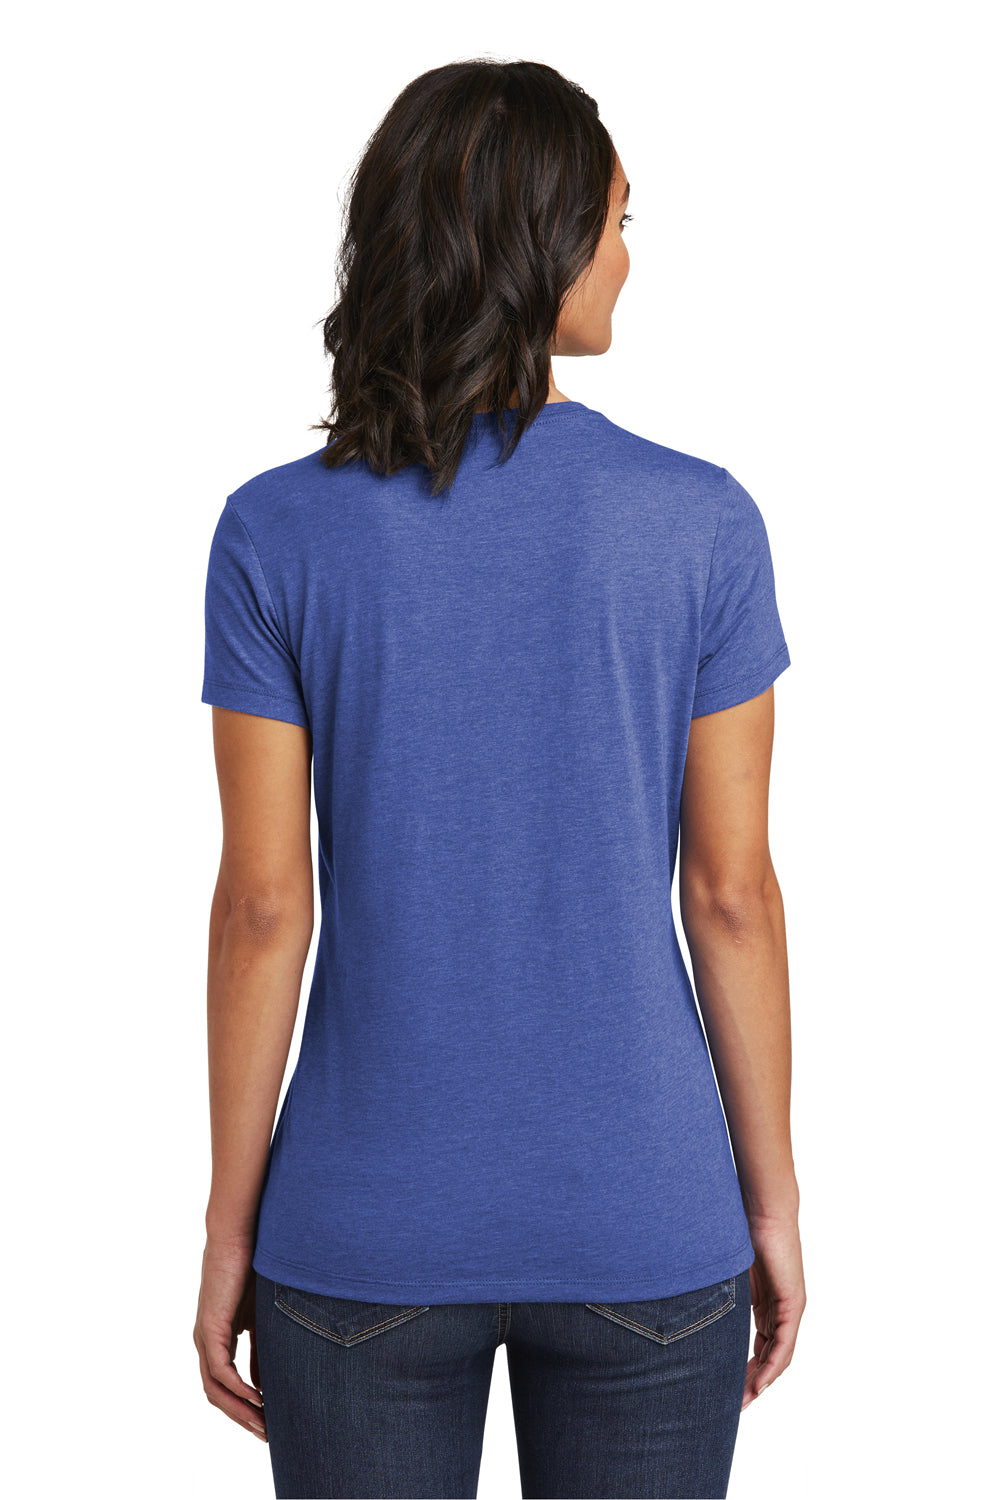 District DT6002 Womens Very Important Short Sleeve Crewneck T-Shirt Heather Royal Blue Back